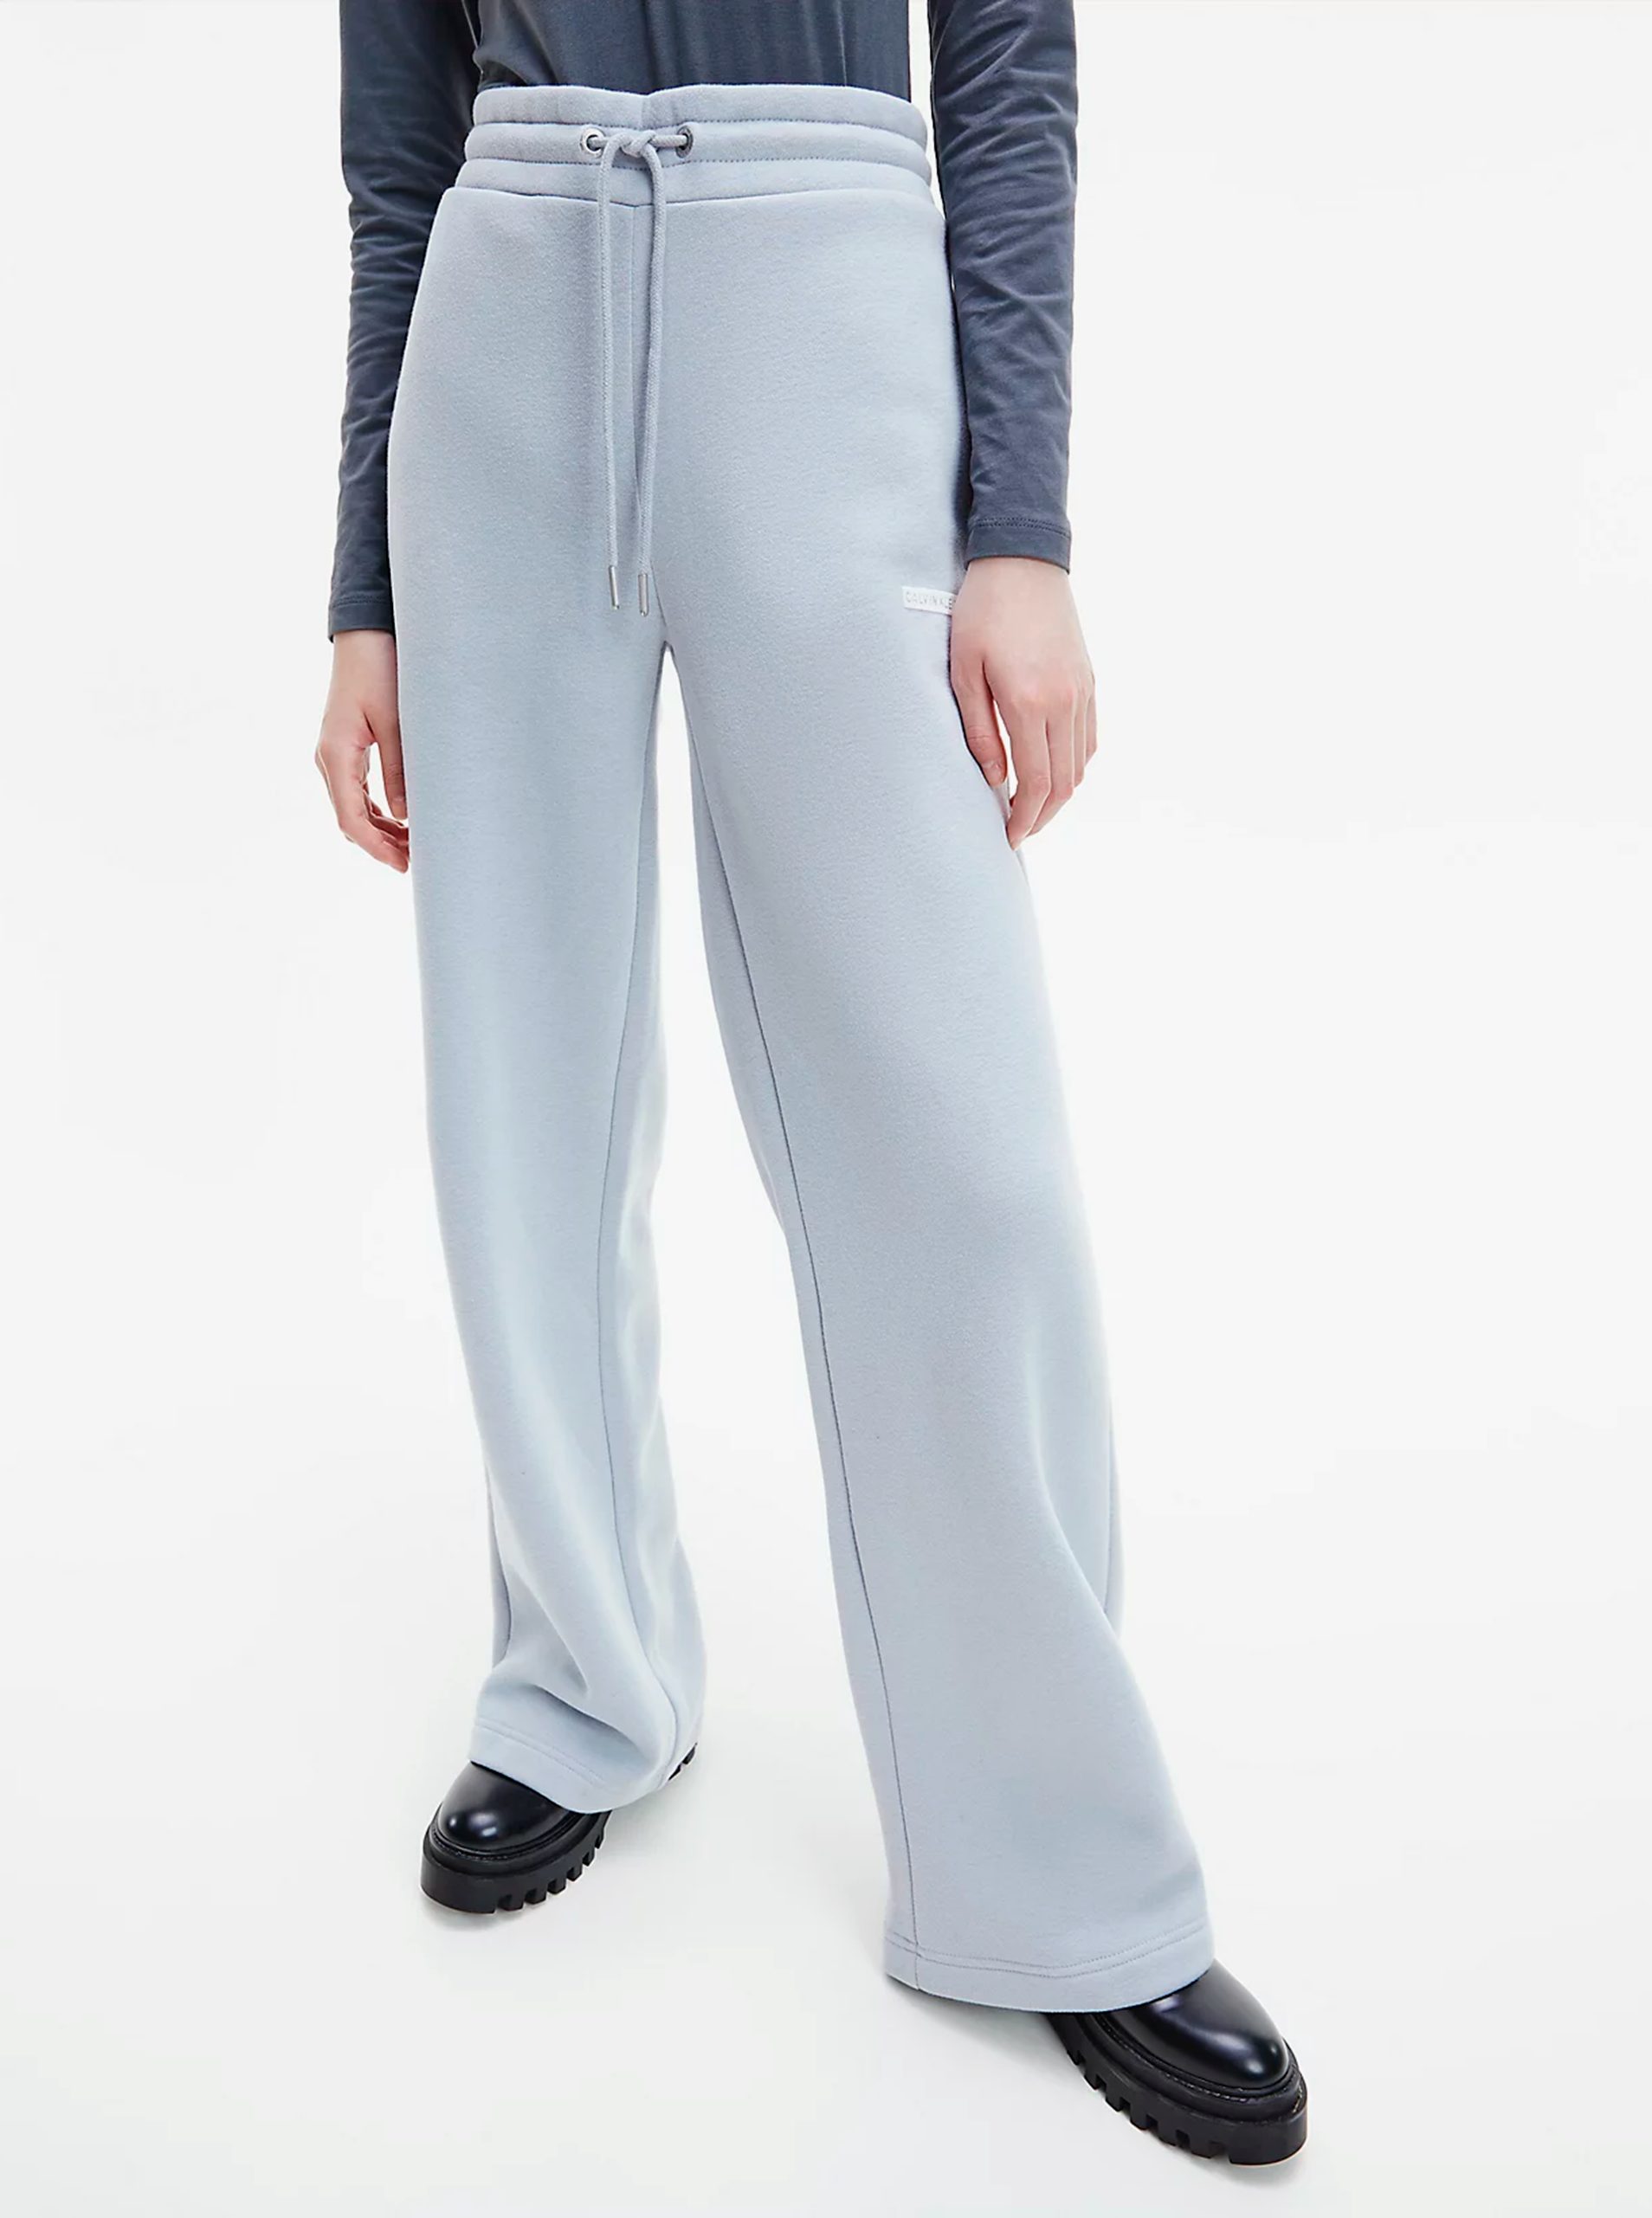 Light blue womens pants Micro Flock Jog Pants Calvin Klein - Women